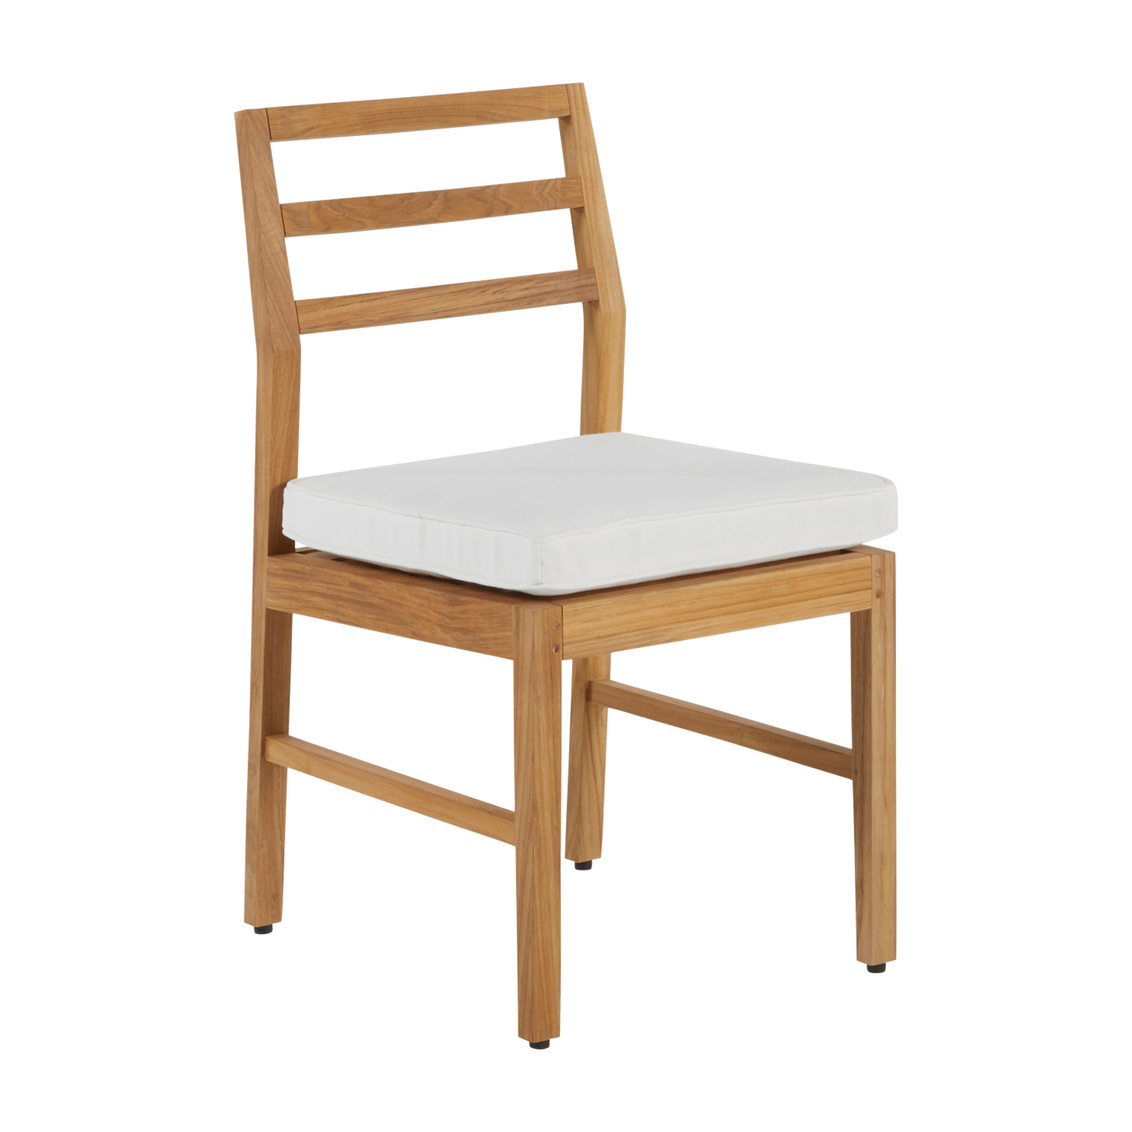 santa barbara teak side chair in natural teak – frame only product image